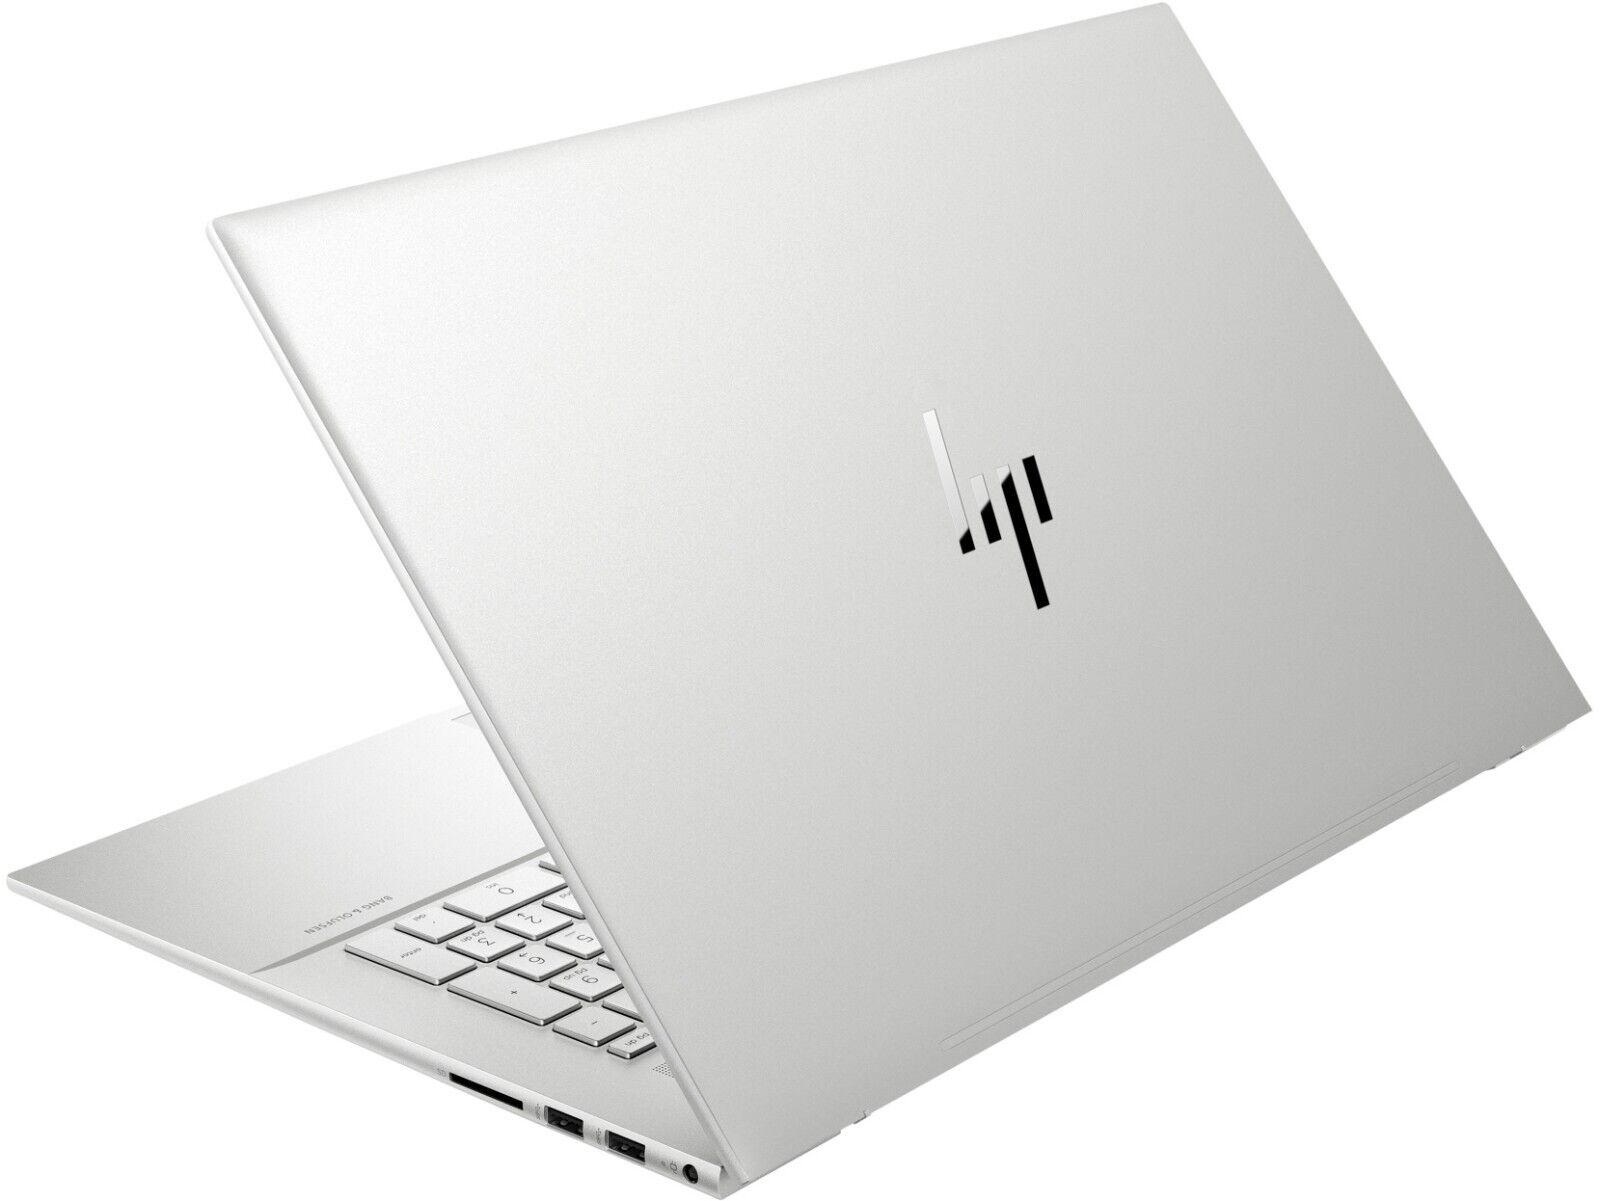 HP Touch Envy 17-cg100 17t Laptop PC 17.3